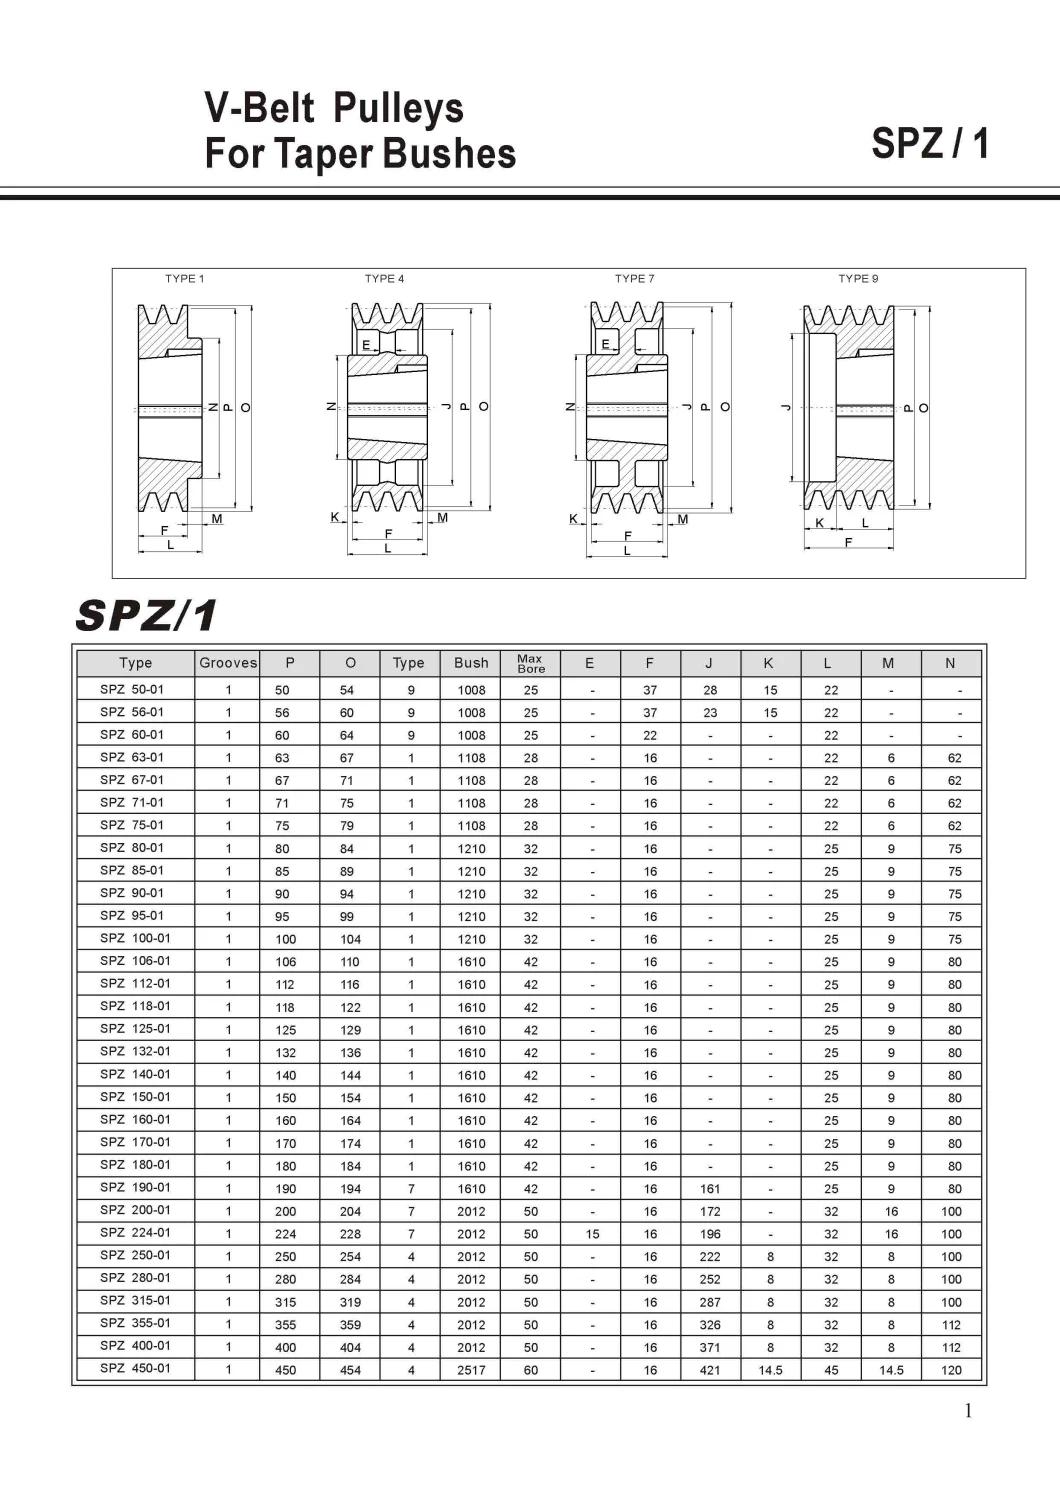 SPA, Spb, Spc, Spz European Standard Taper Bore V Belt Pulley